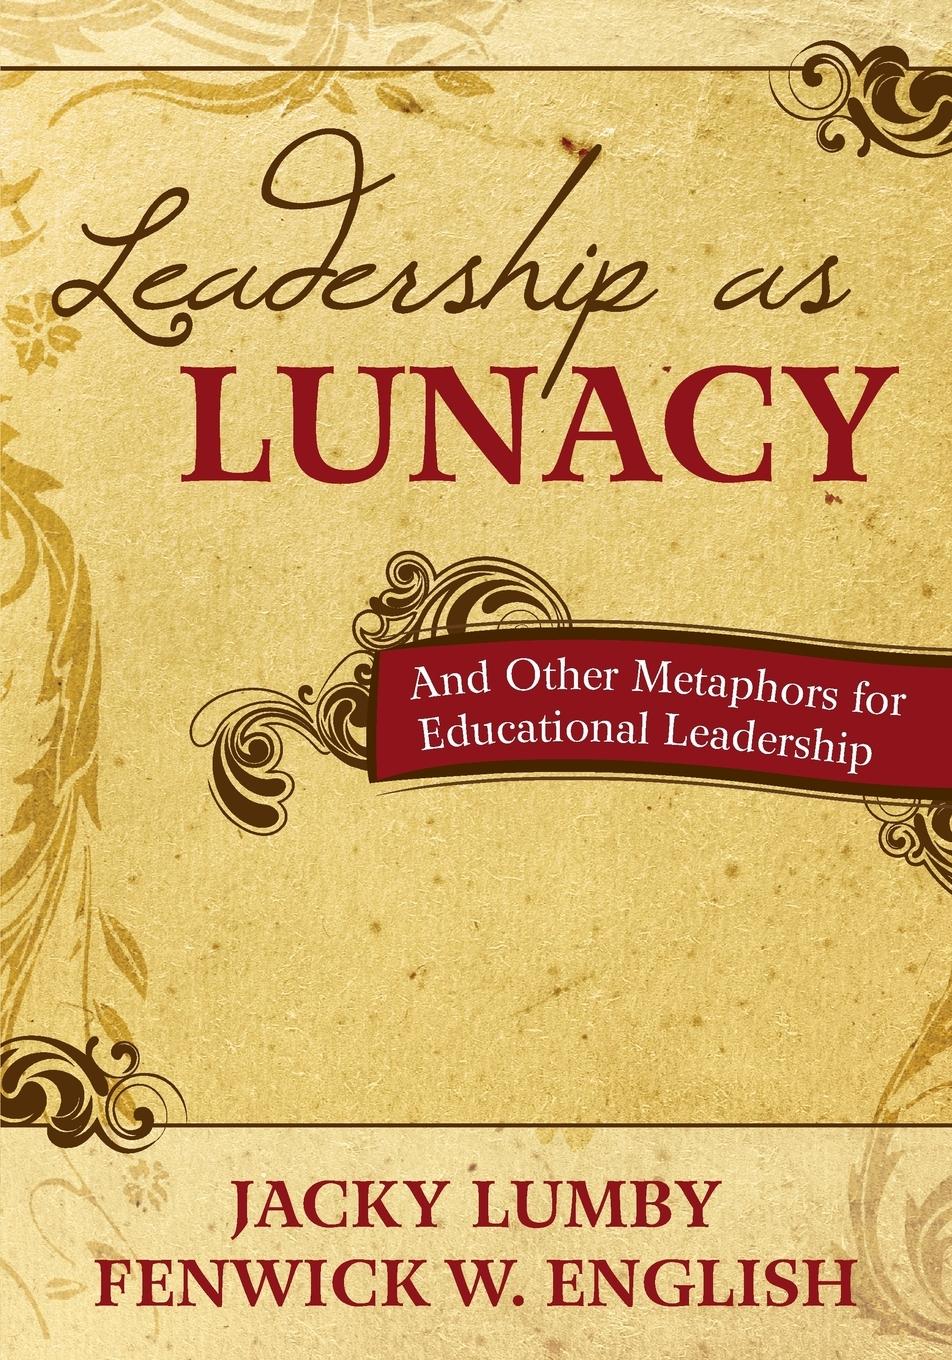 Leadership as Lunacy: And Other Metaphors for Educational Leadership - Lumby, Jacky English, Fenwick W.